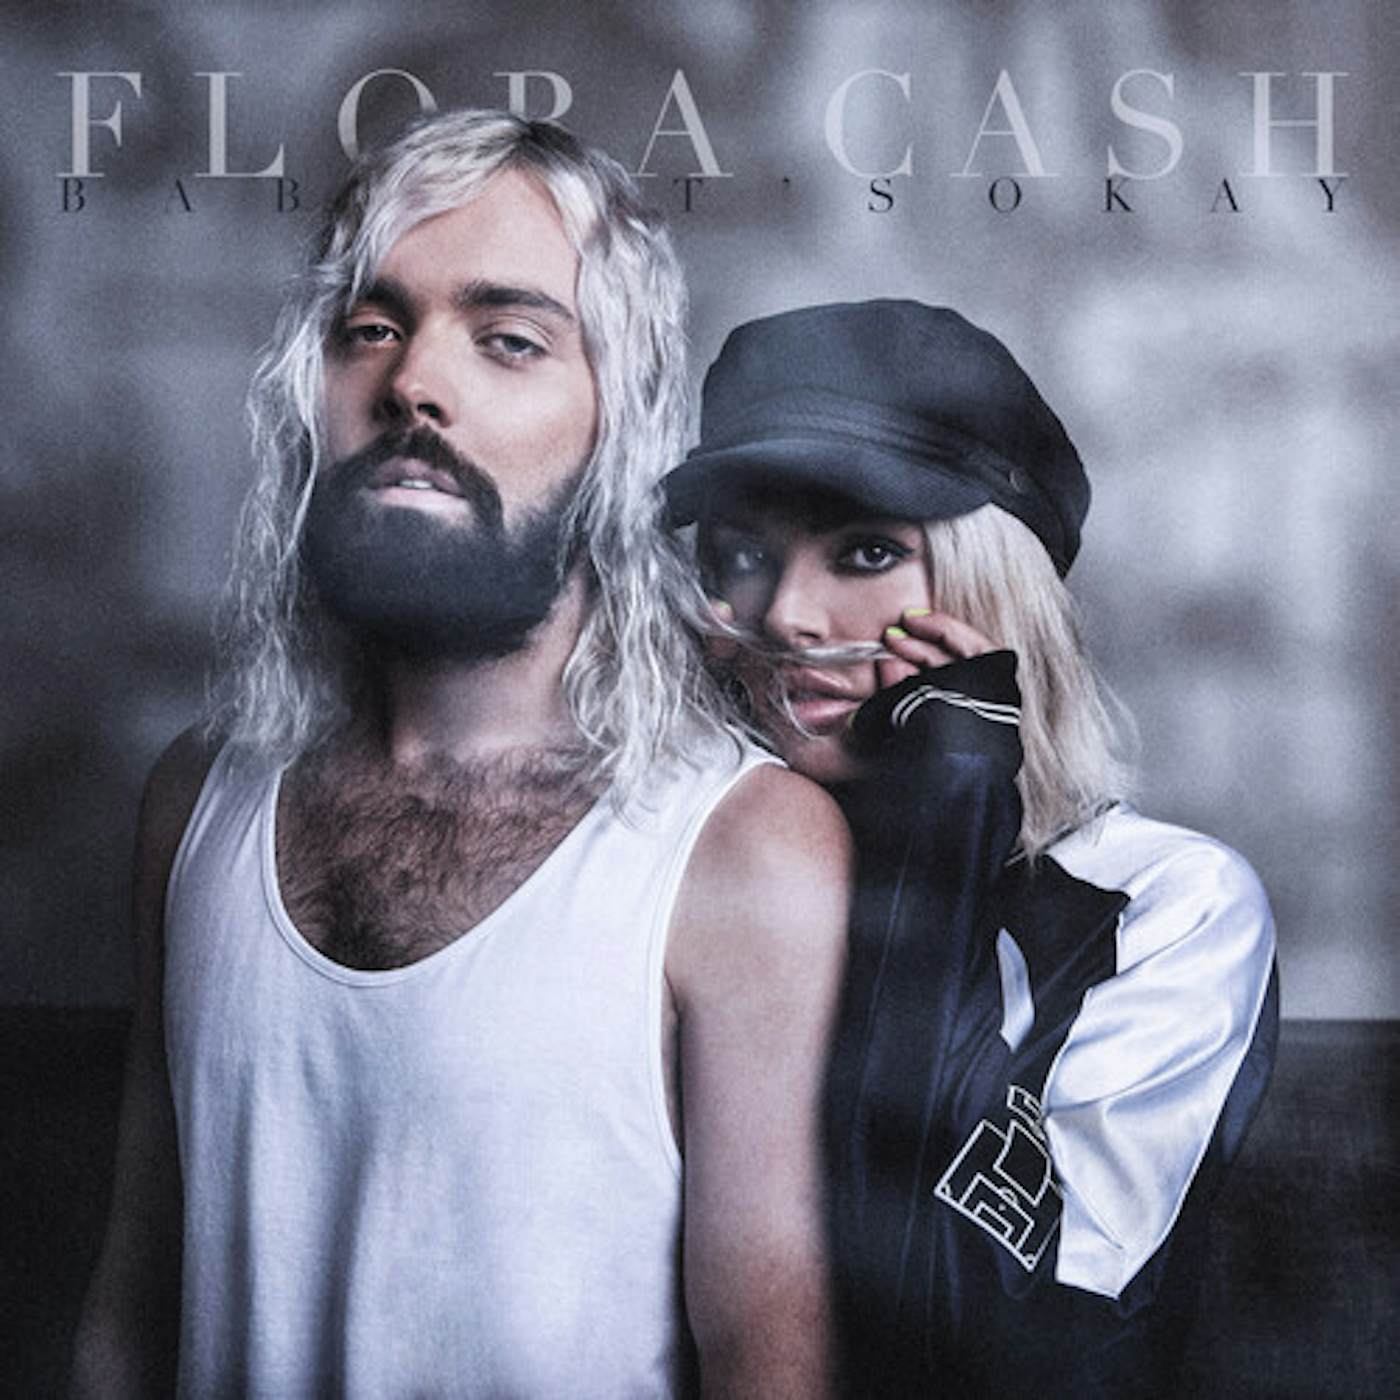 flora cash BABY IT'S OKAY Vinyl Record